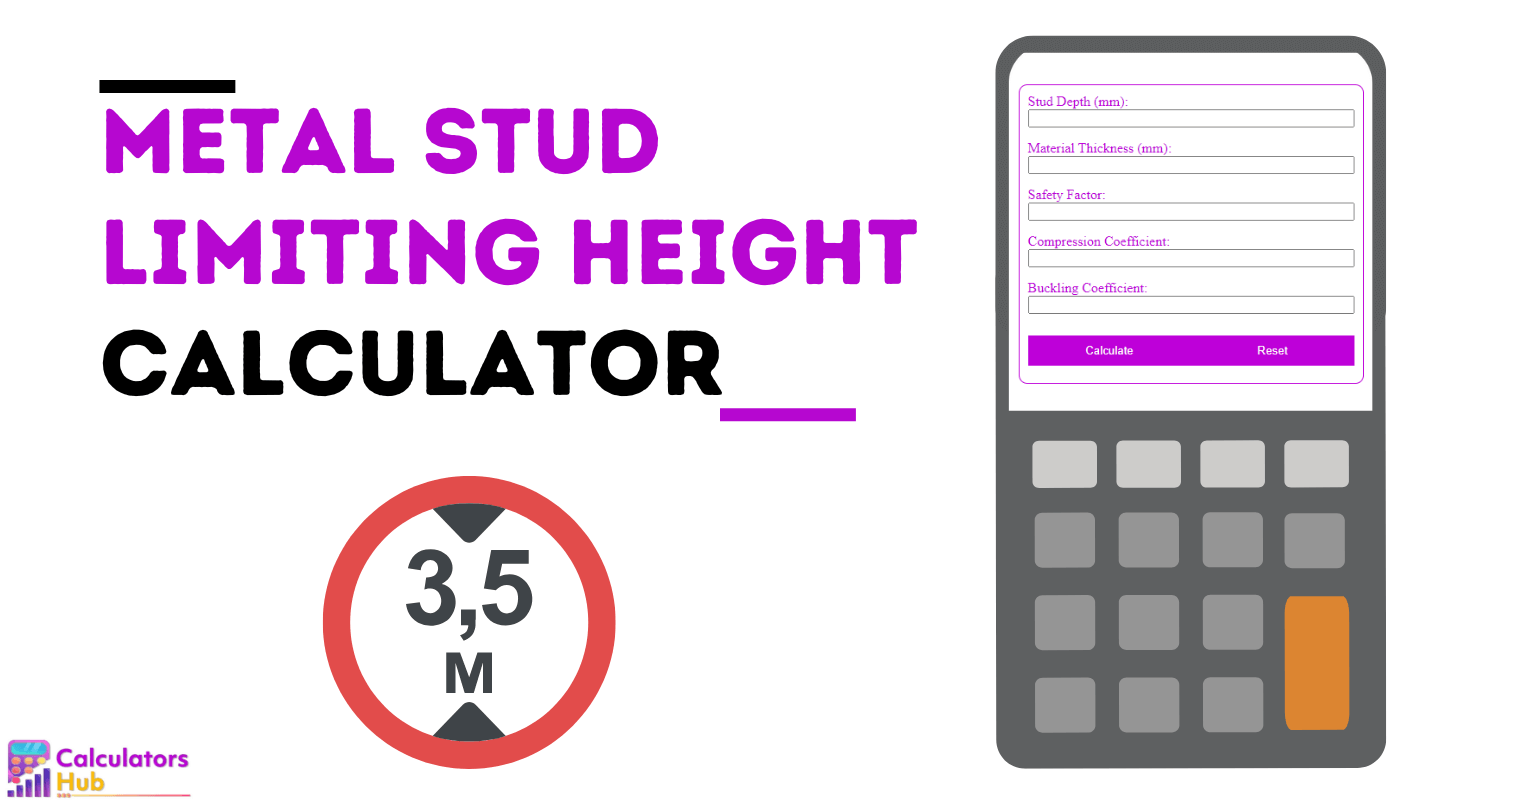 Metal Stud Limiting Height Calculator